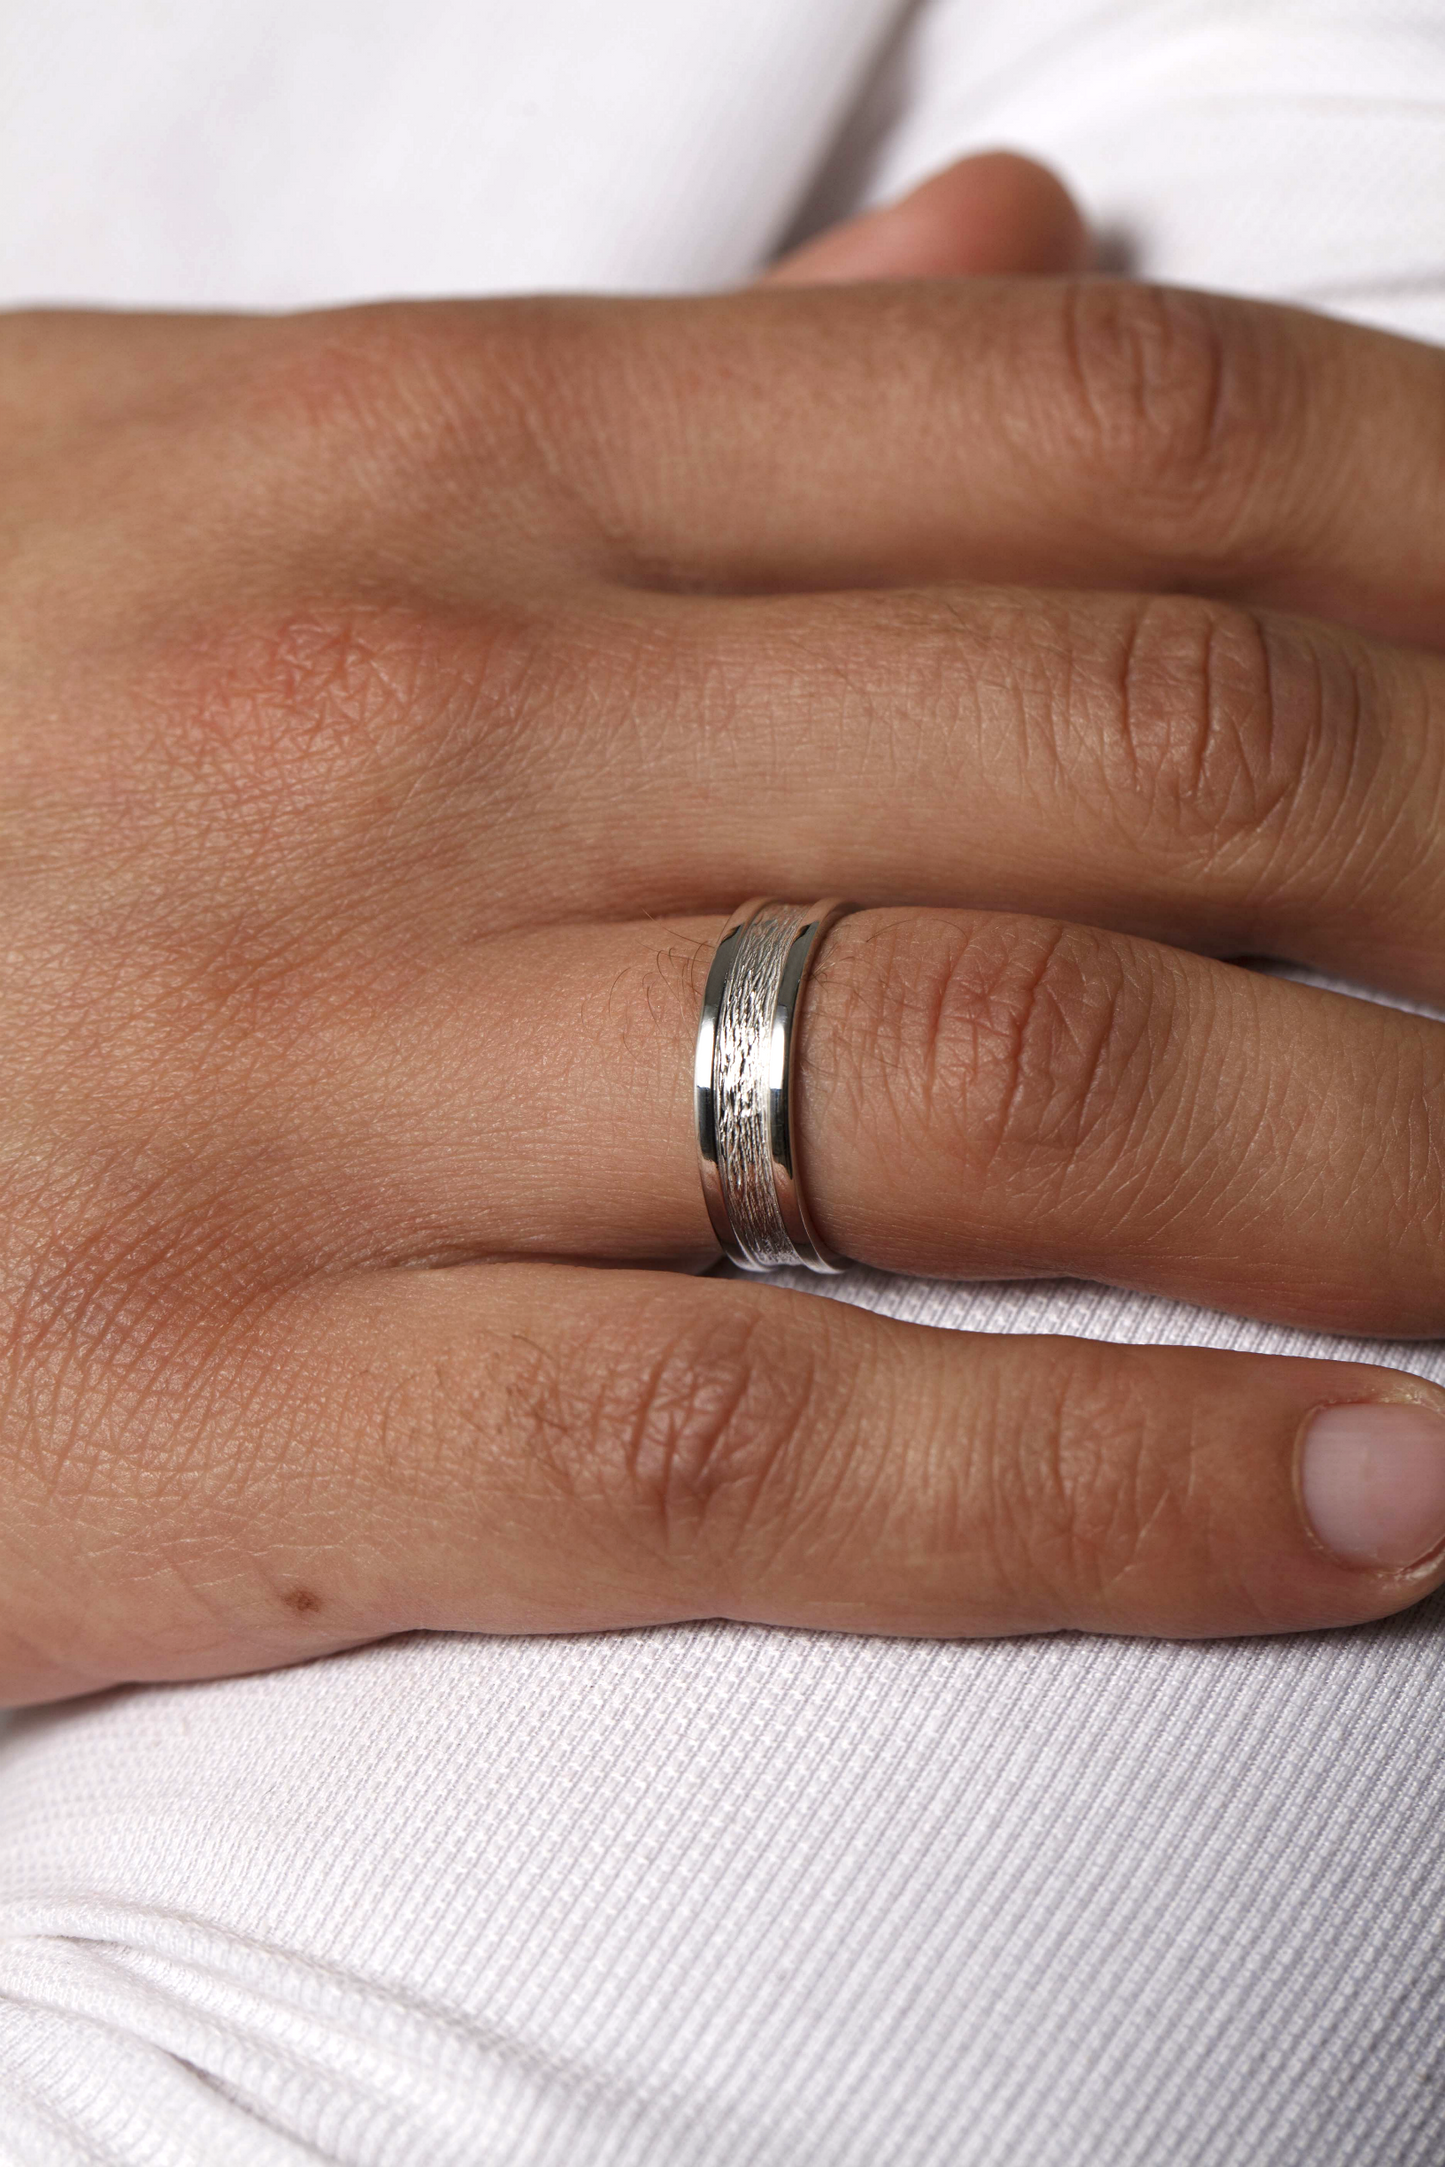 Mens wedding band rose gold. Mens wedding ring. Unique mens wedding band. 14k solid gold ring. Textured wedding bands. Male wedding ring. Ring for him. 14k gold band 6mm